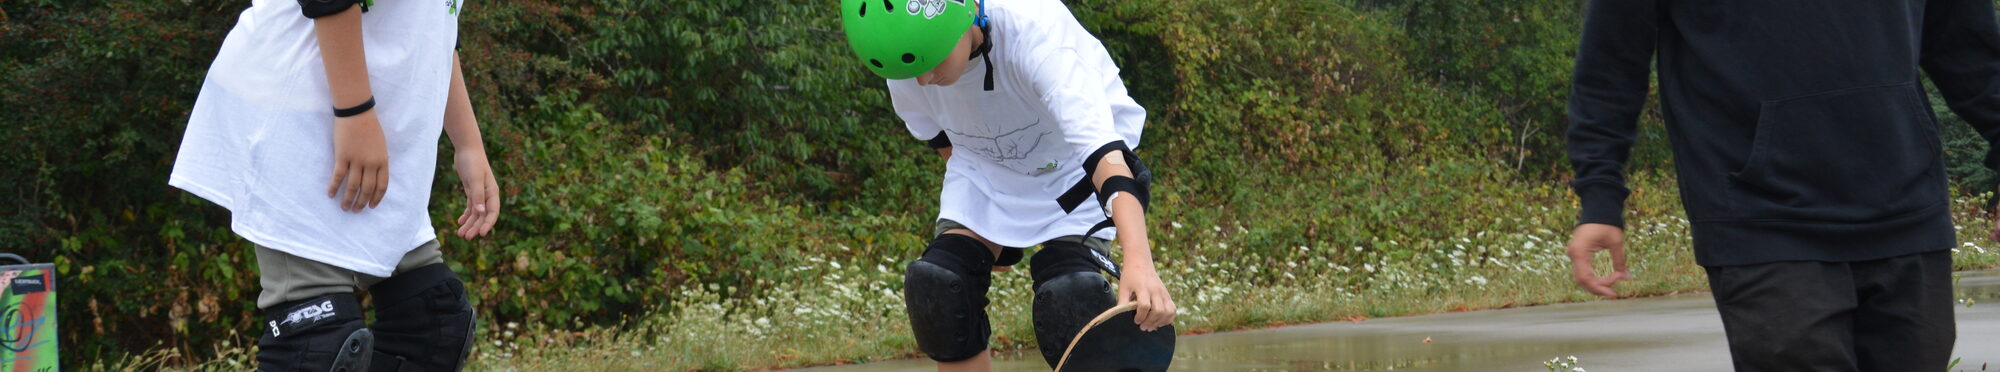 Skateboard-Kurs in Bergheim